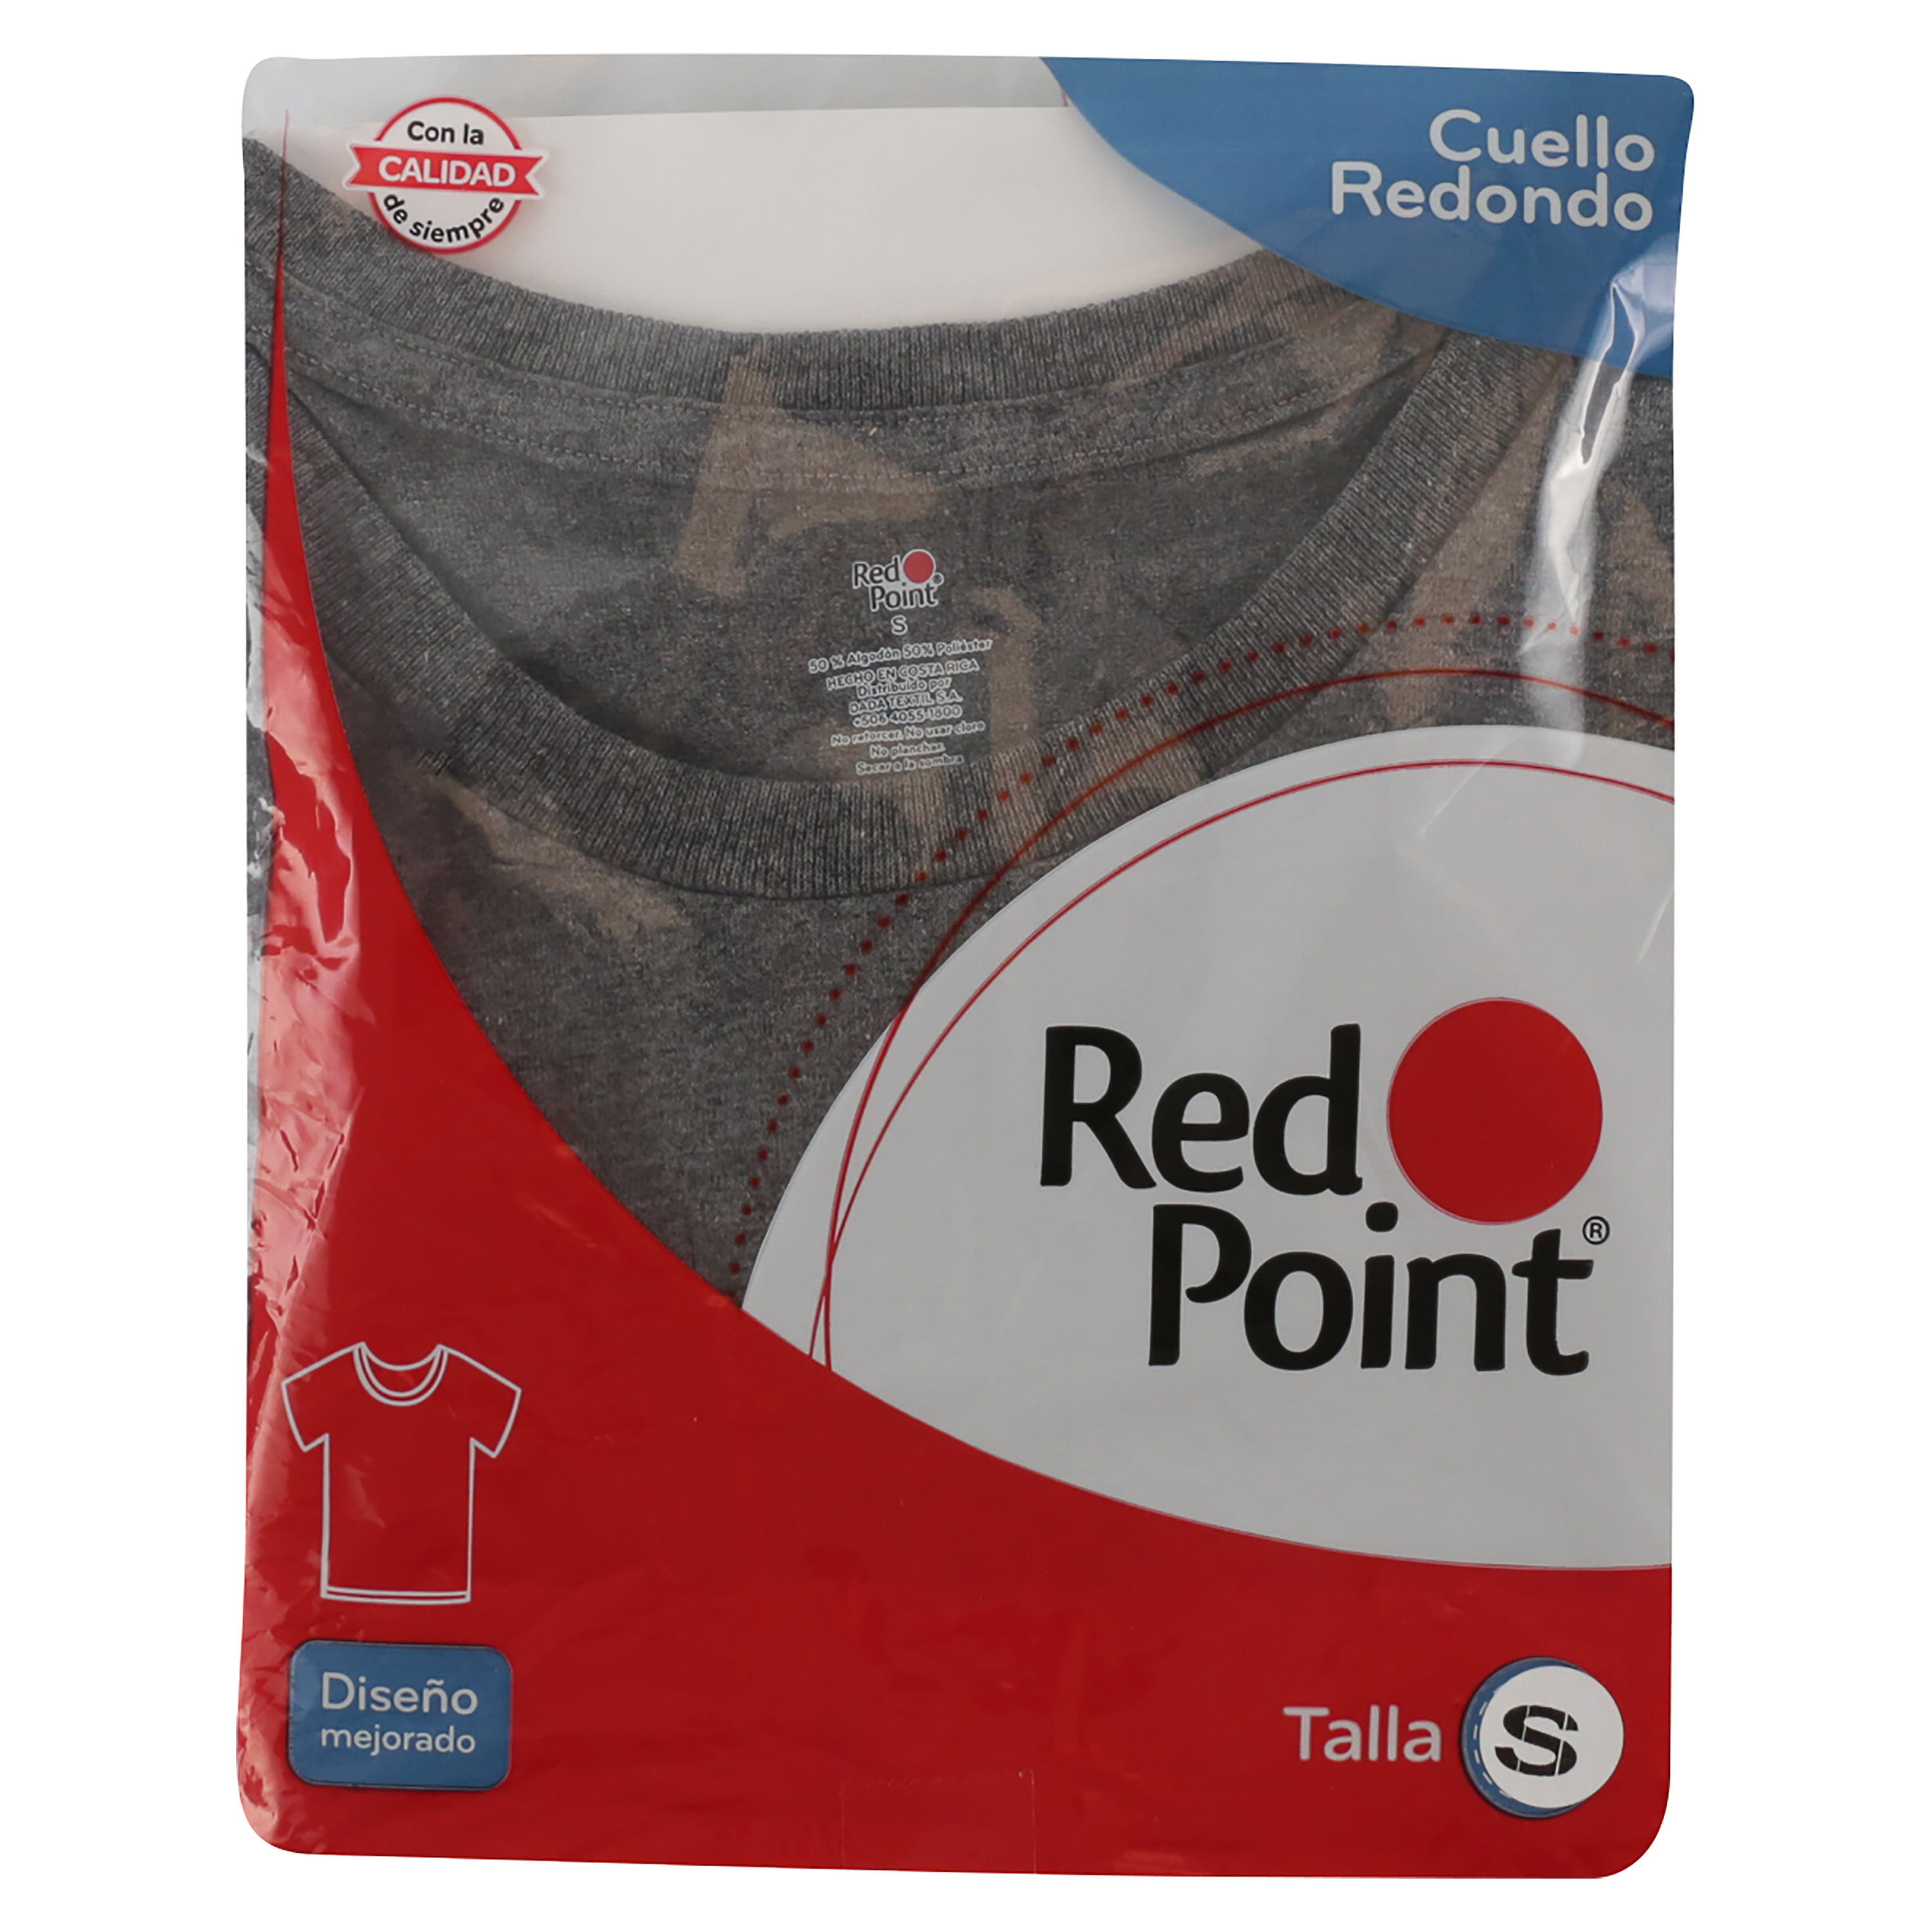 Camiseta Caballero de Tirantes - Red Point